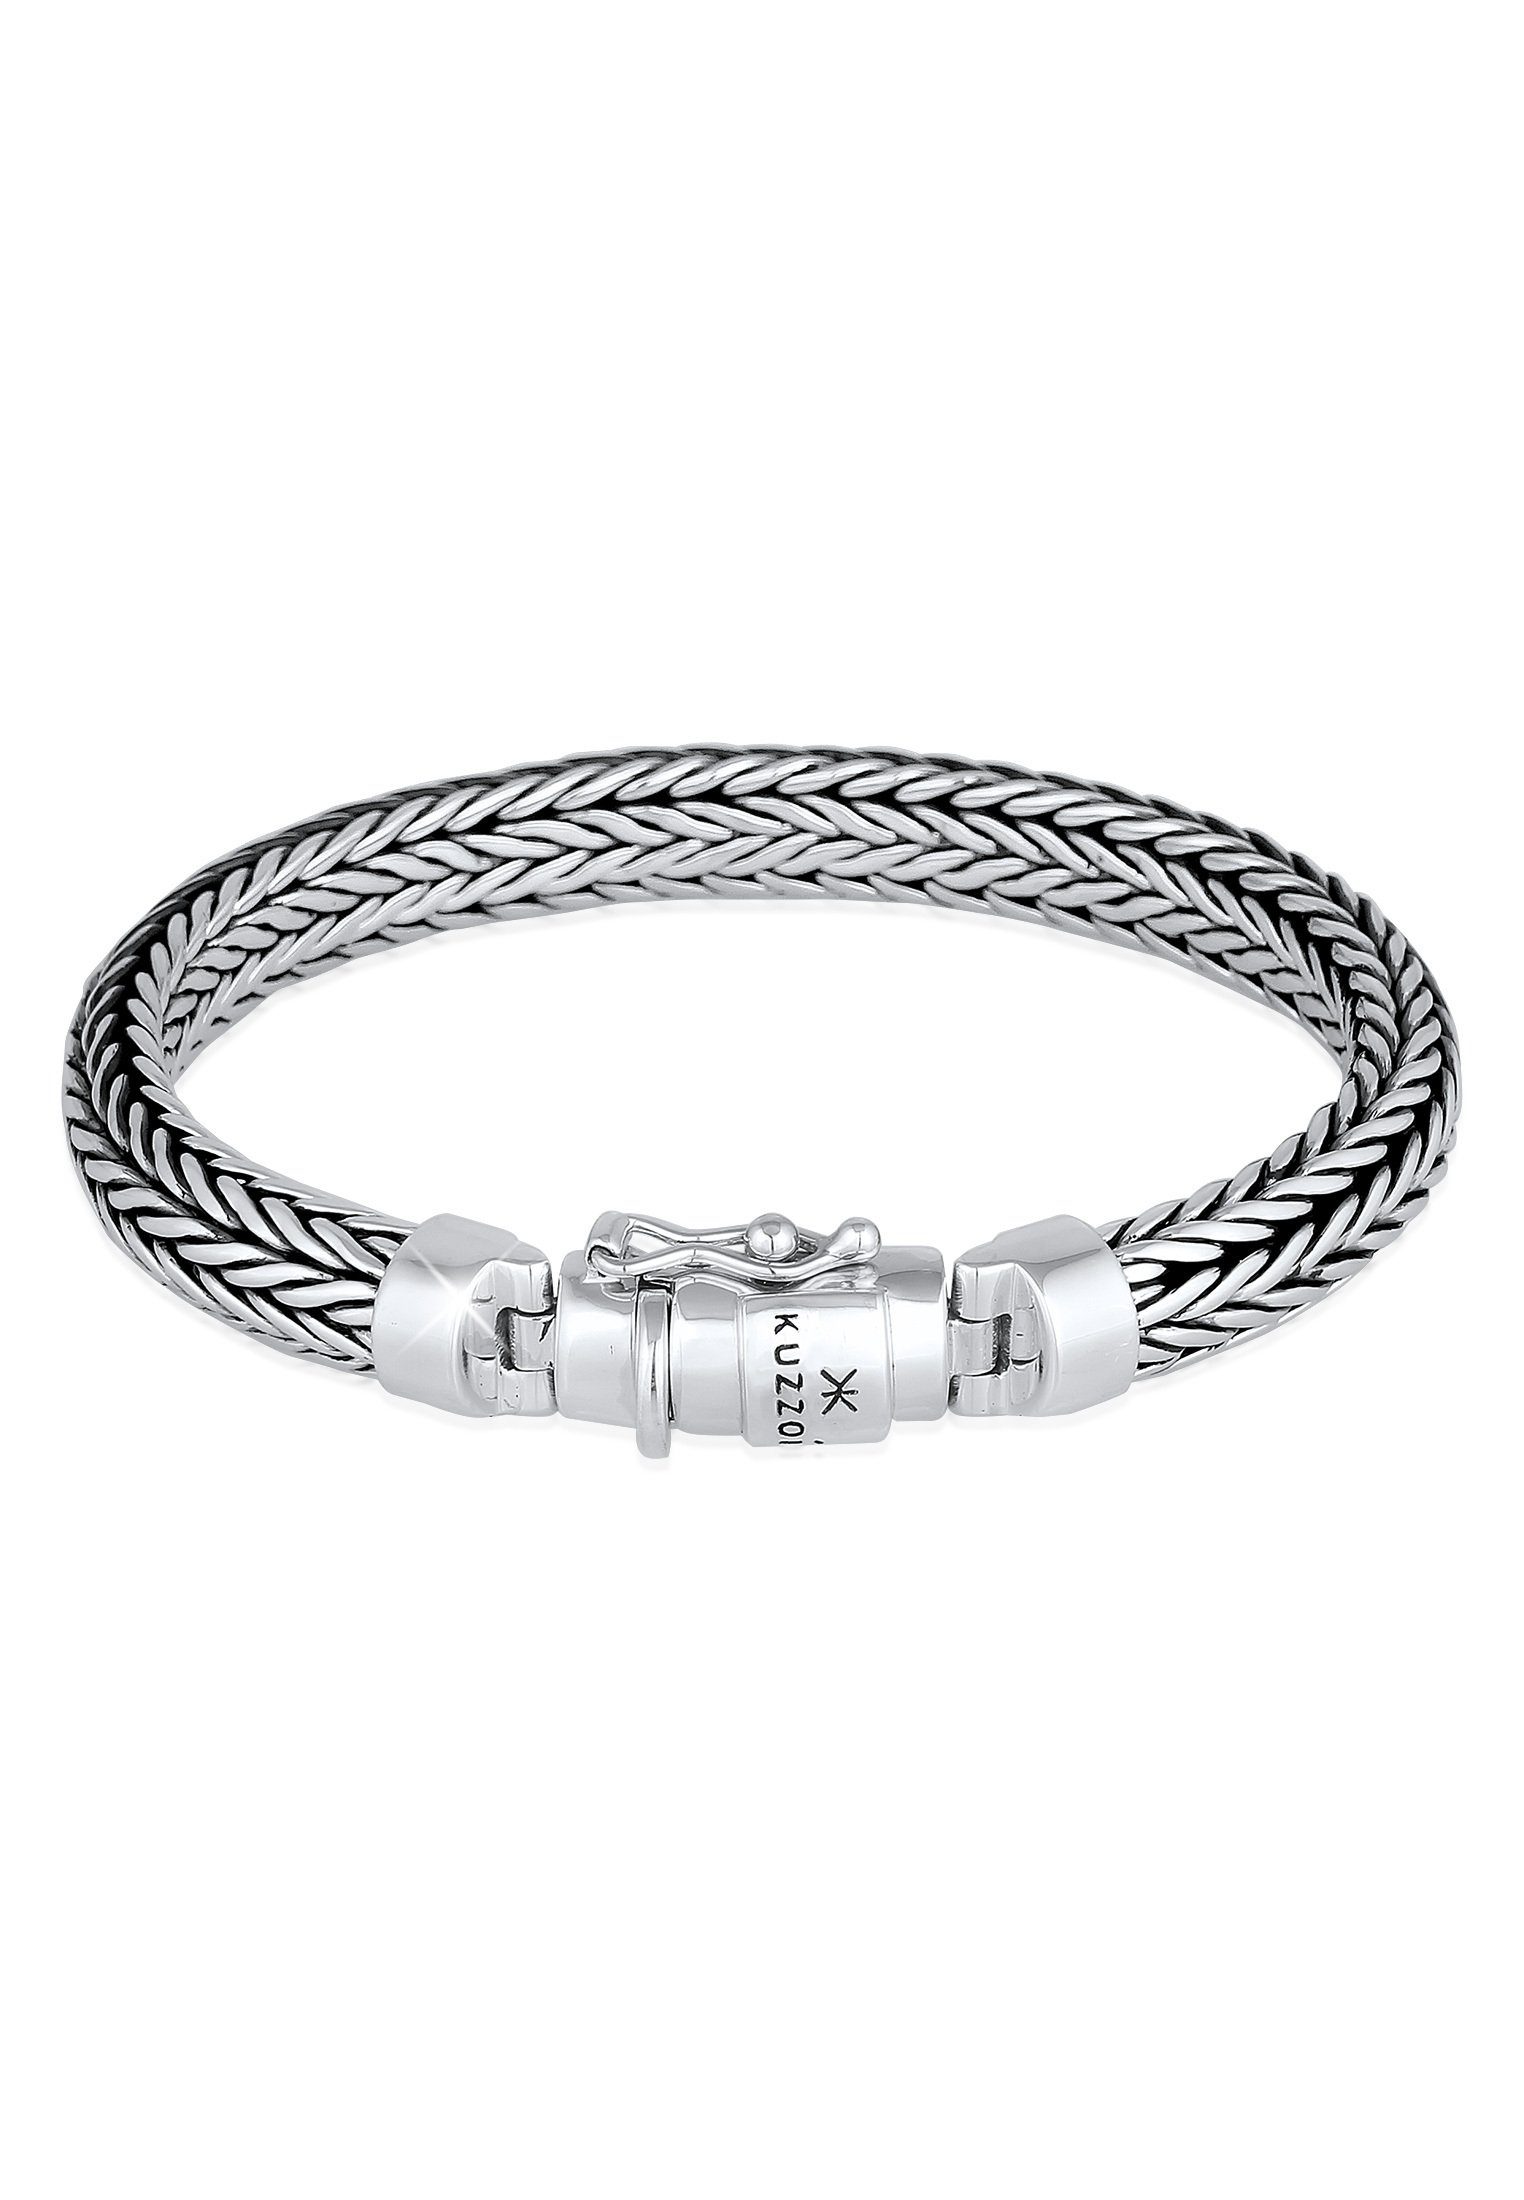 Kuzzoi Armband Herren oxidiert Kastenverschluss 925 Silber | Silberarmbänder